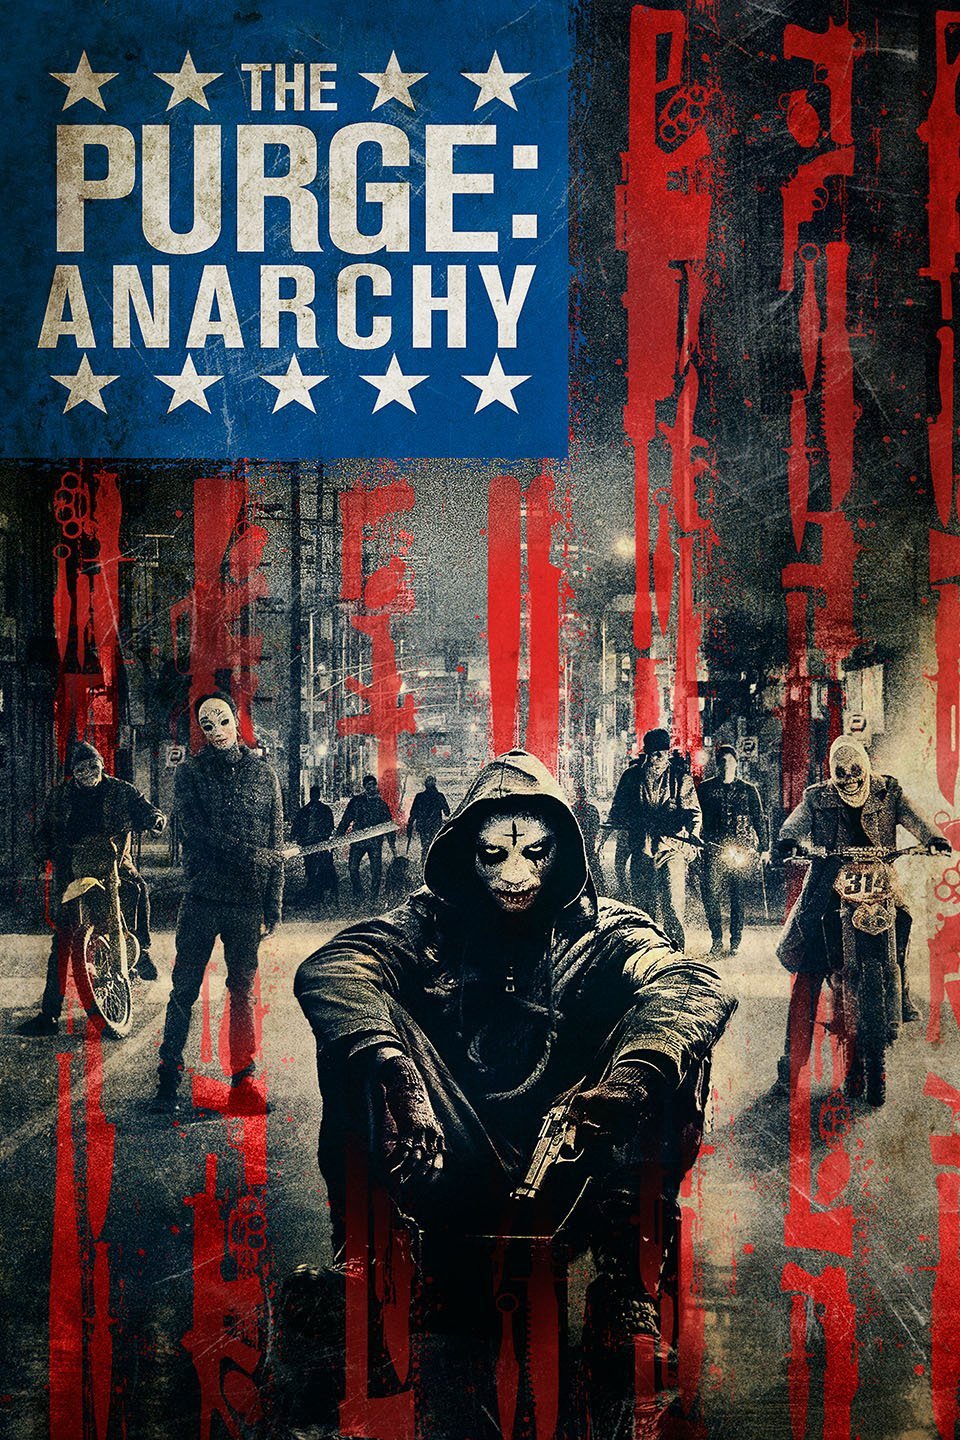 [MINI Super-HQ] The Purge Anarchy (2014) คืนอำมหิต คืนล่าฆ่าไม่ผิด ภาค 2 [1080p] [พากย์ไทย DTS + เสียงอังกฤษ DTS] [บรรยายไทย + อังกฤษ] [เสียงไทย + ซับไทย]